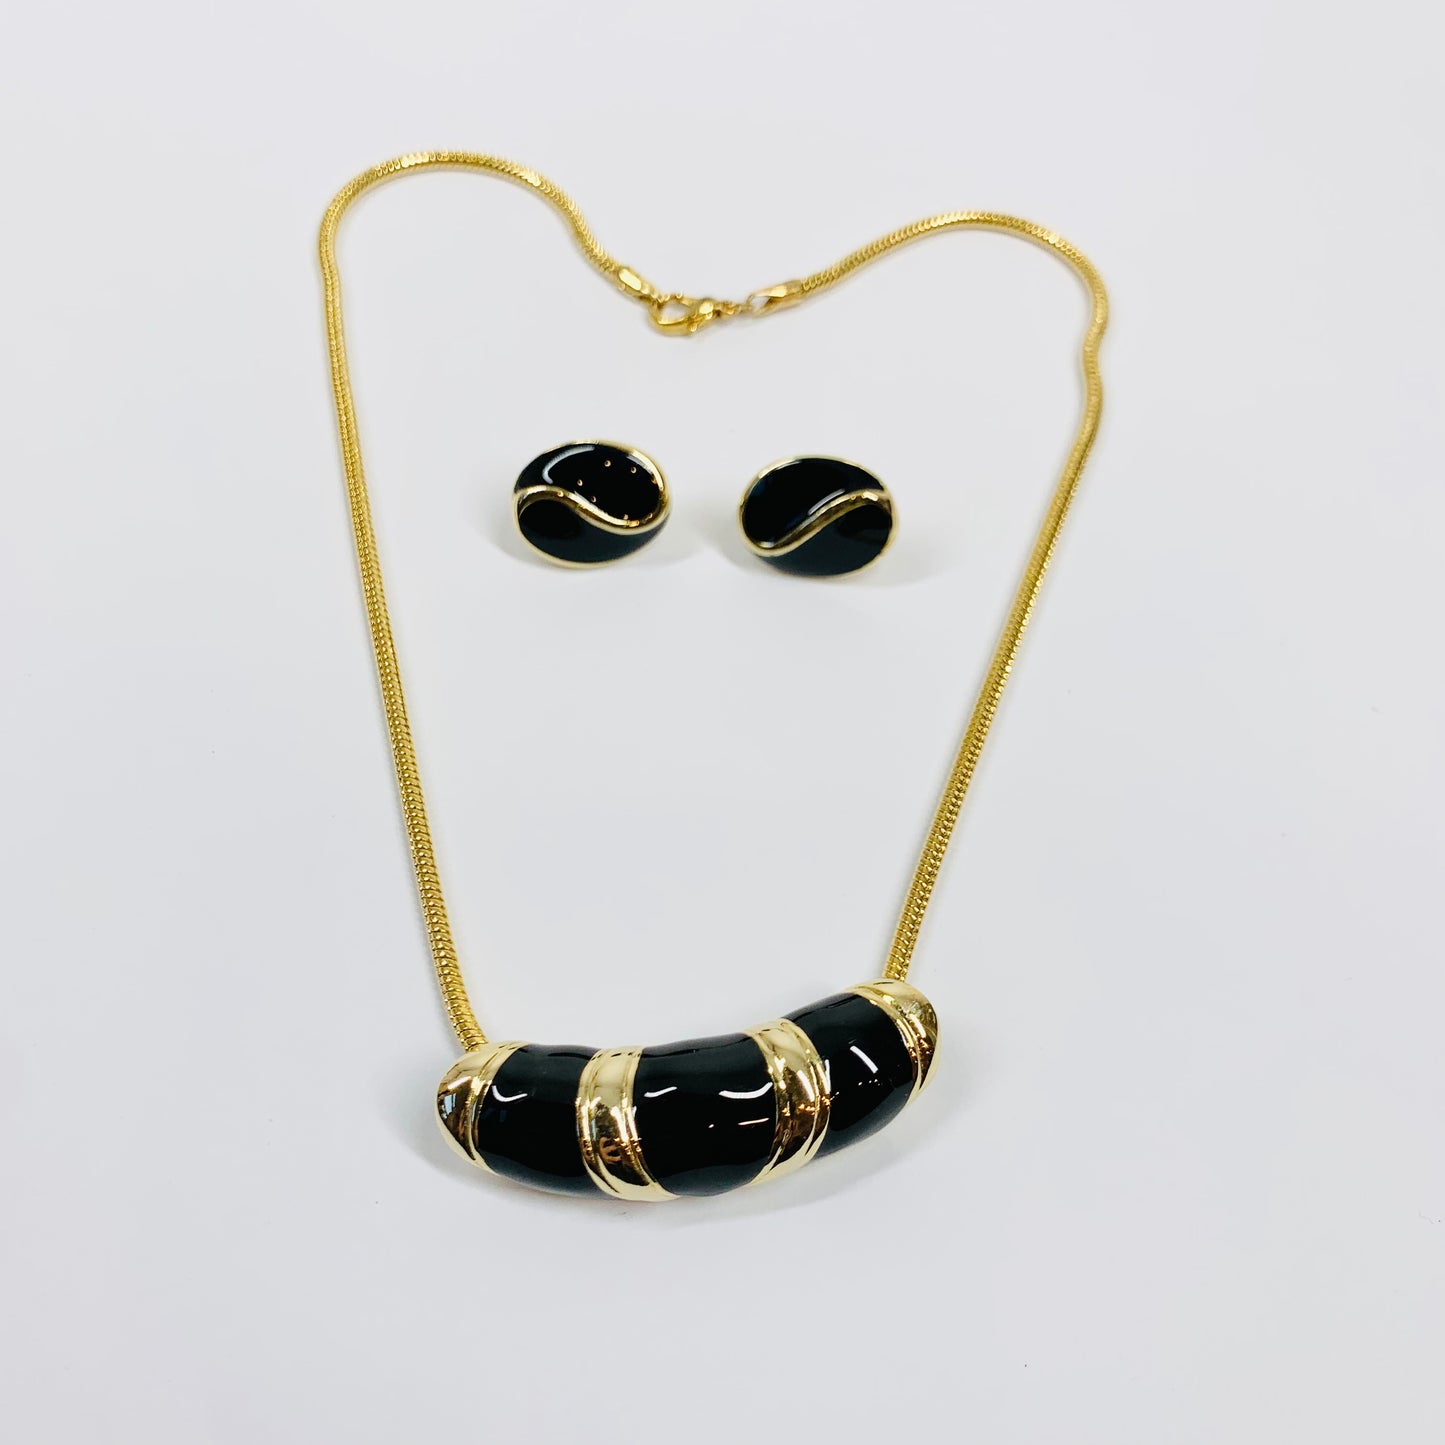 Rare 1960s Barcs statement necklace with black enamel pendant